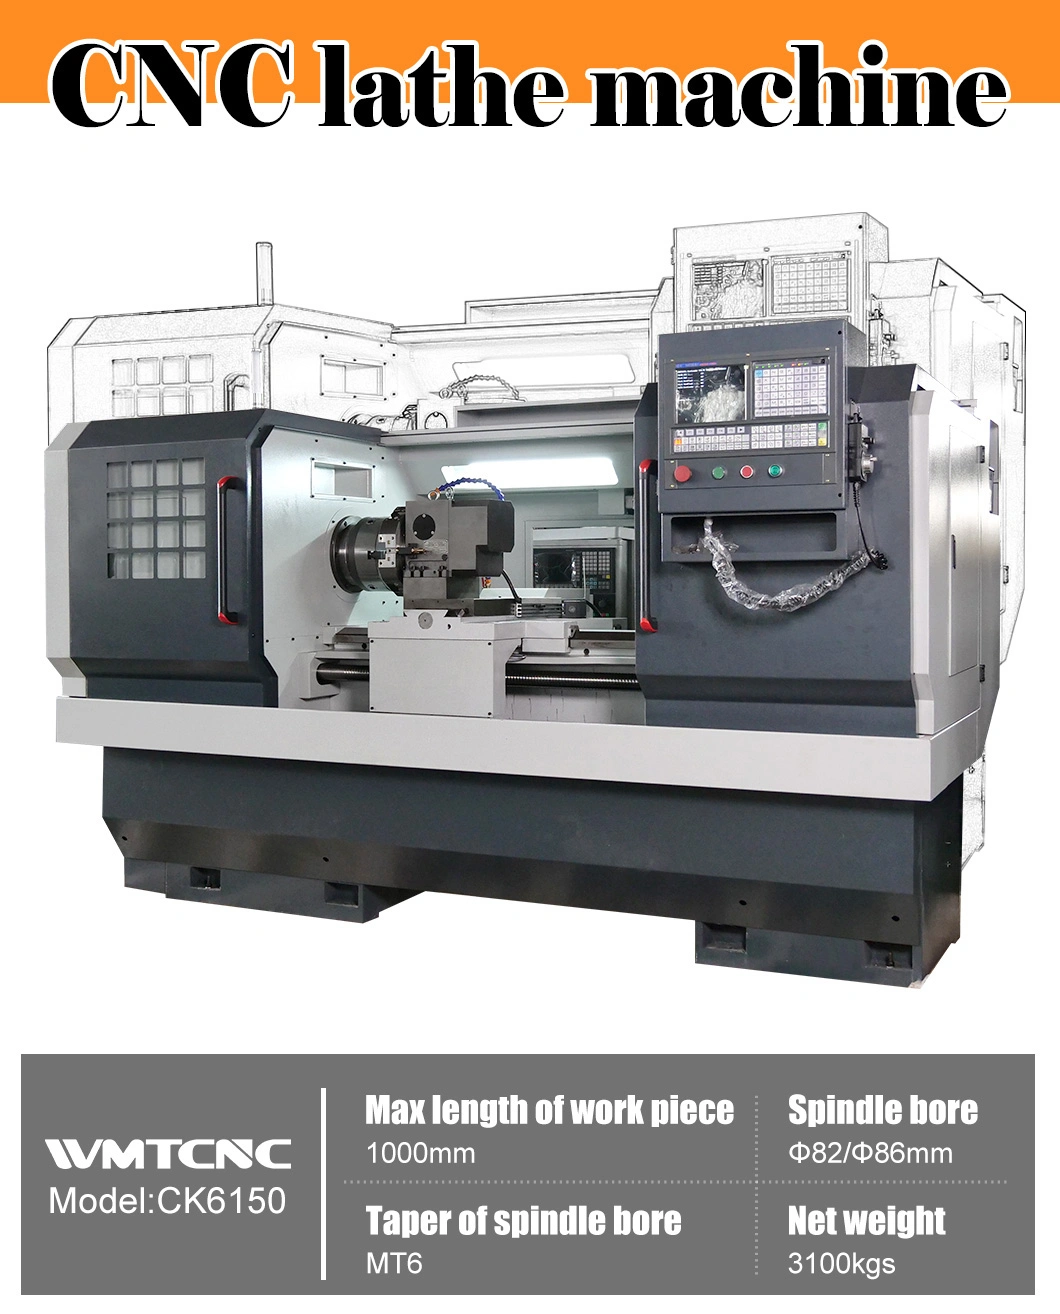 WMTCNC 1000mm CK6150 High Precision CNC Horizontal Bench Lathe Machine